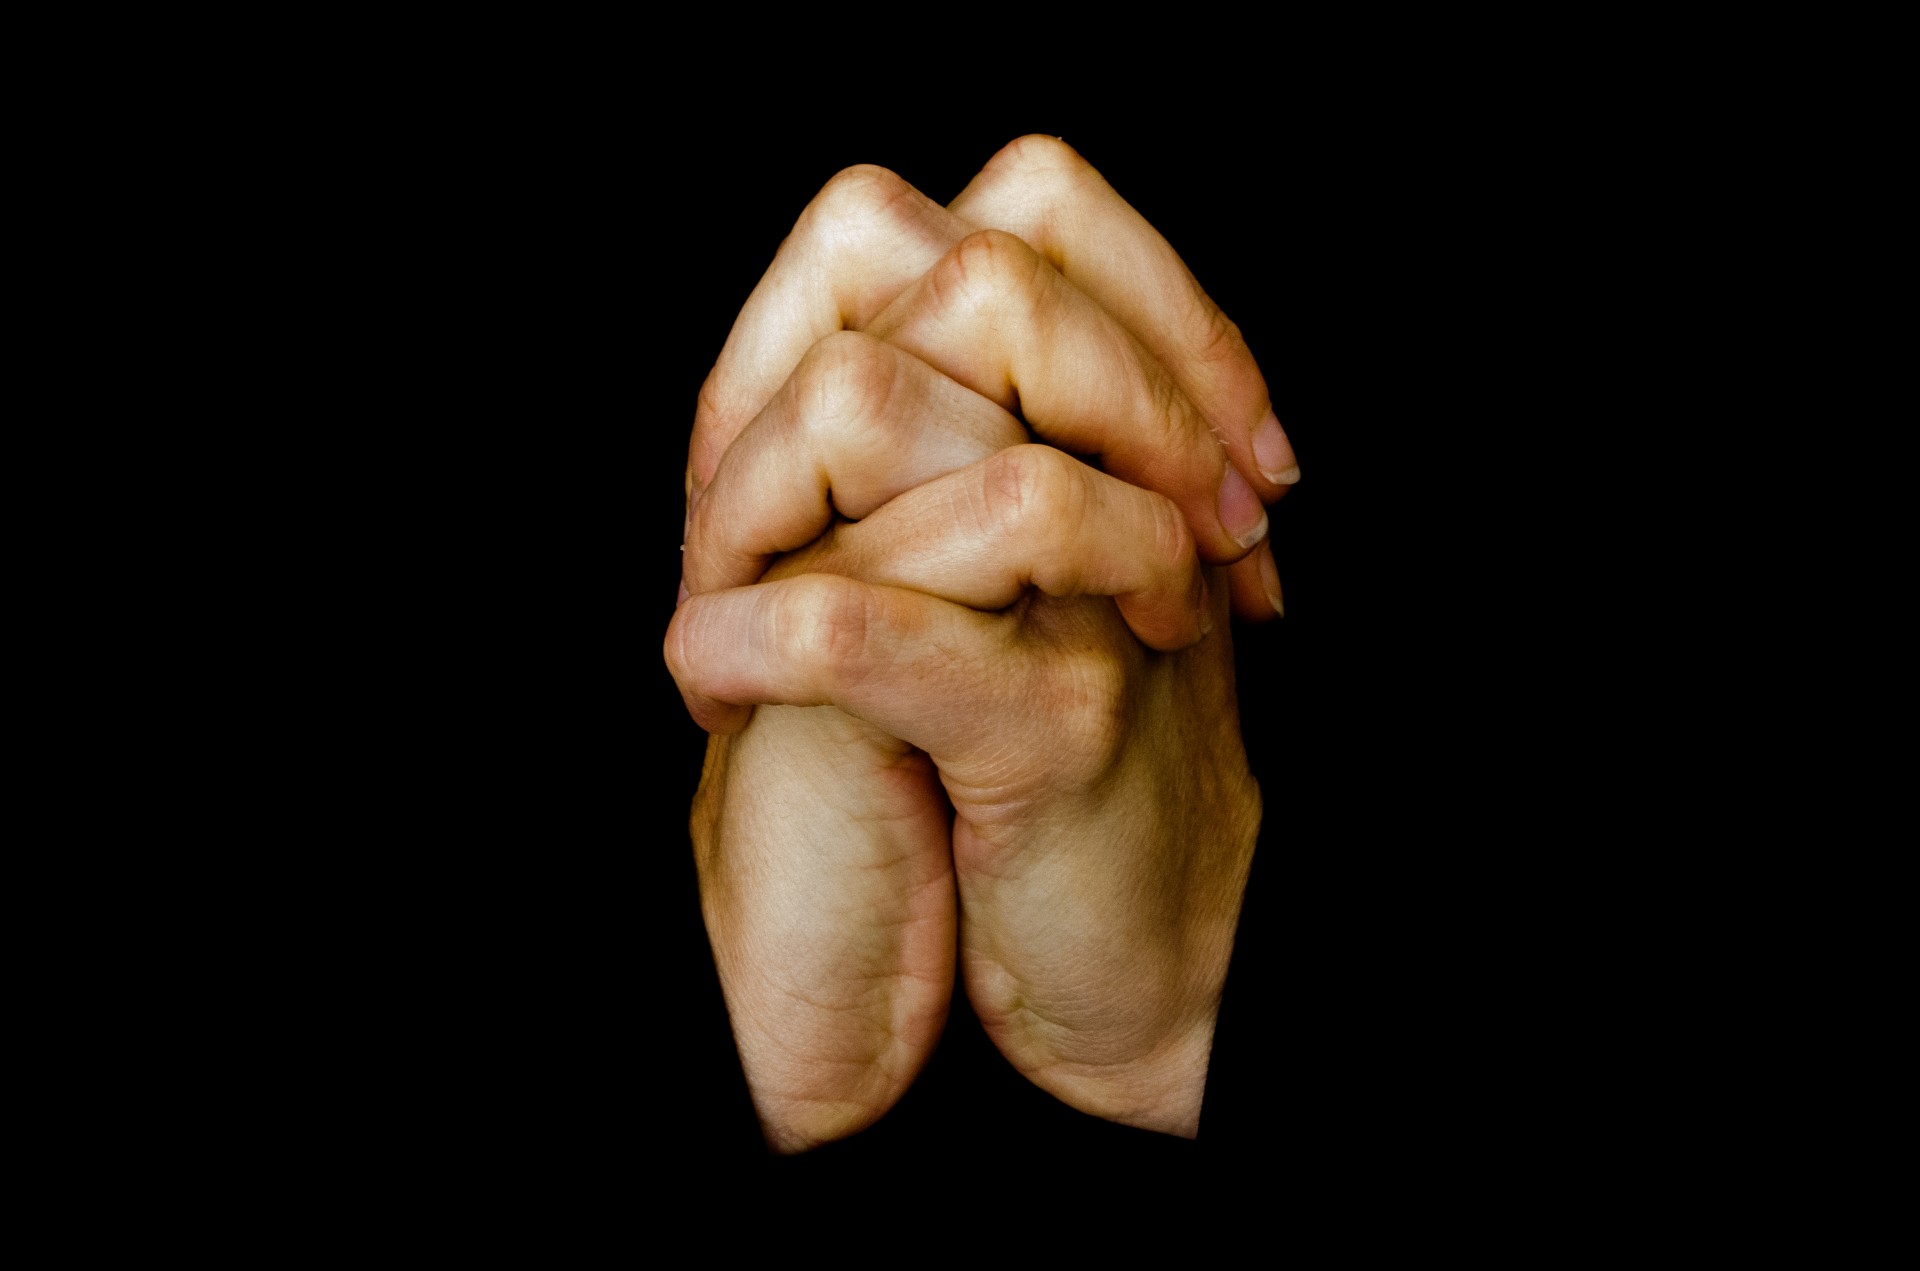 Молиться руки